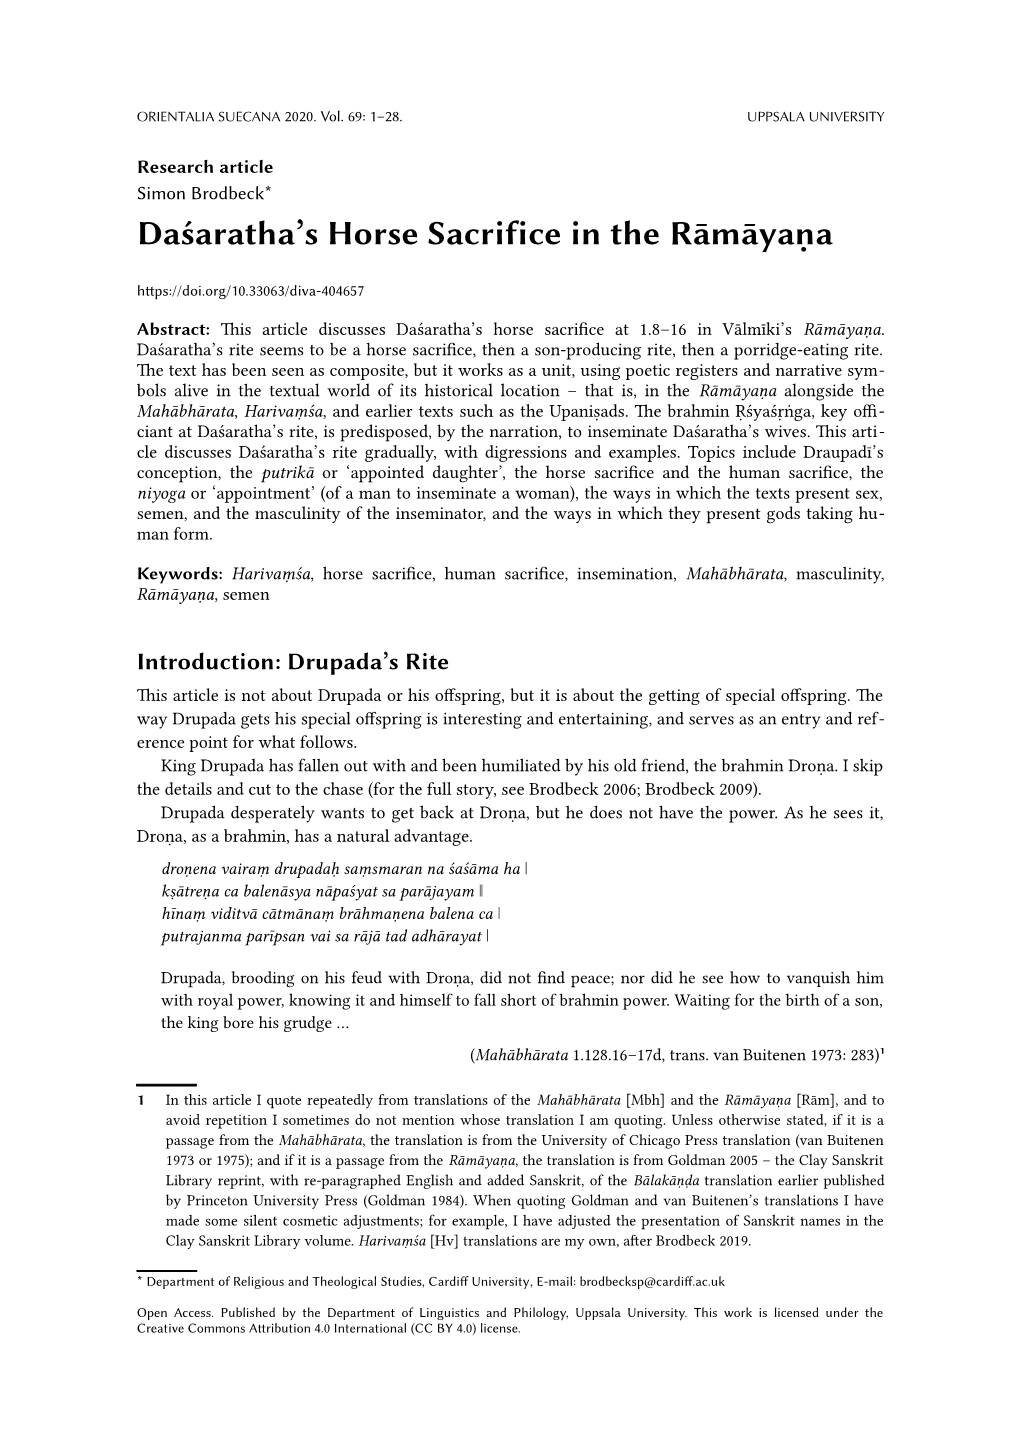 Daśaratha's Horse Sacrifice in the Rāmāyaṇa